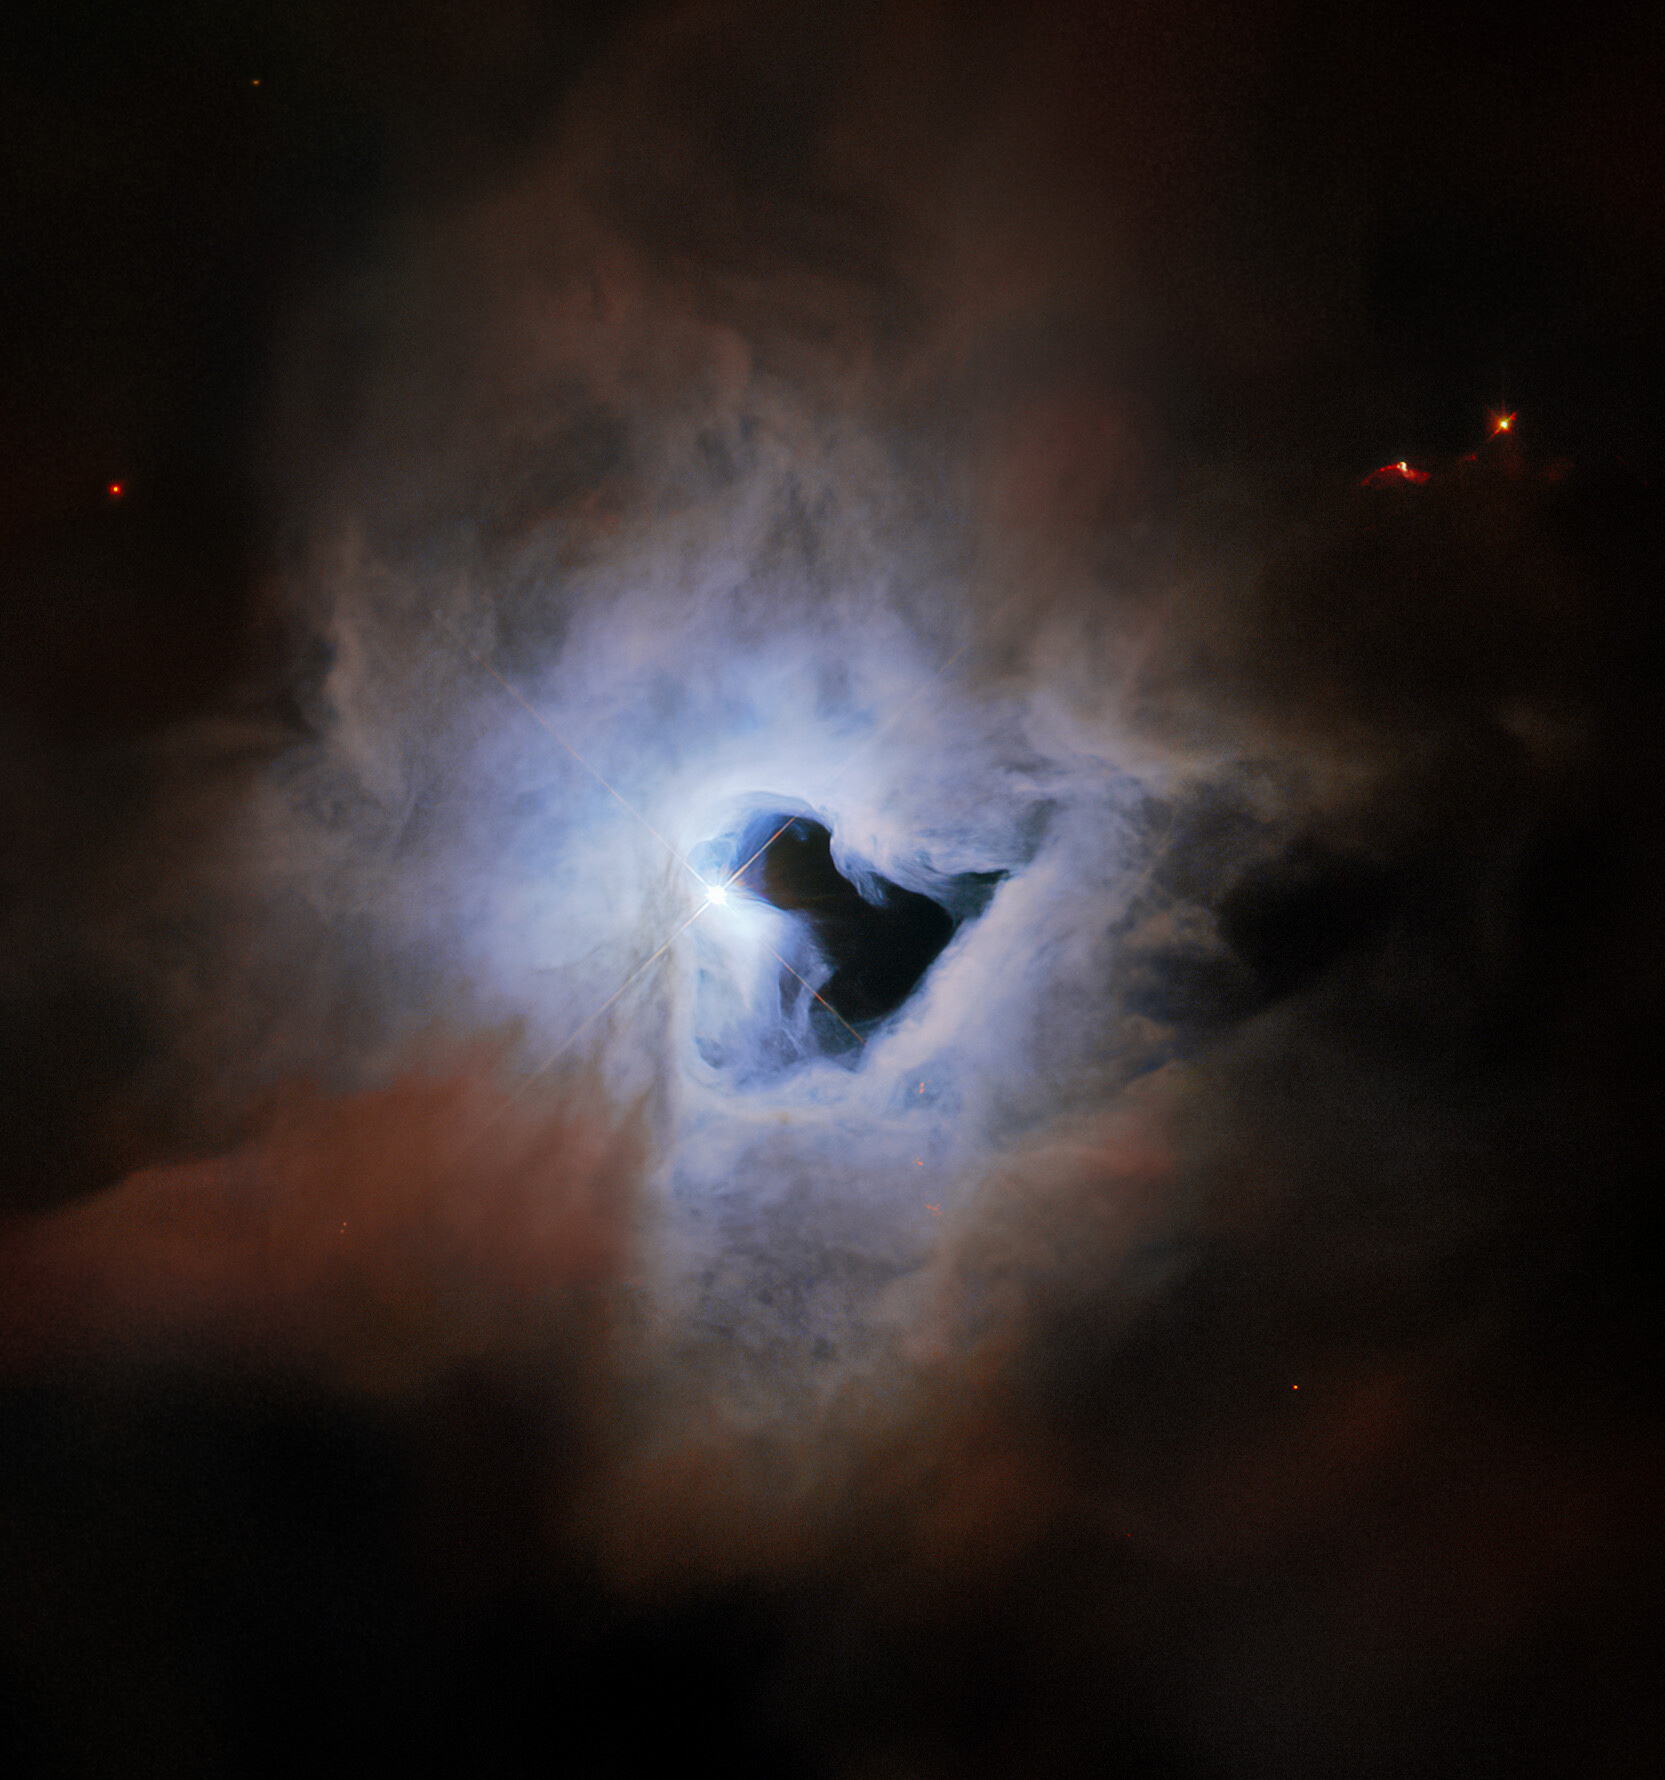 cosmic nursery keyhole nebula